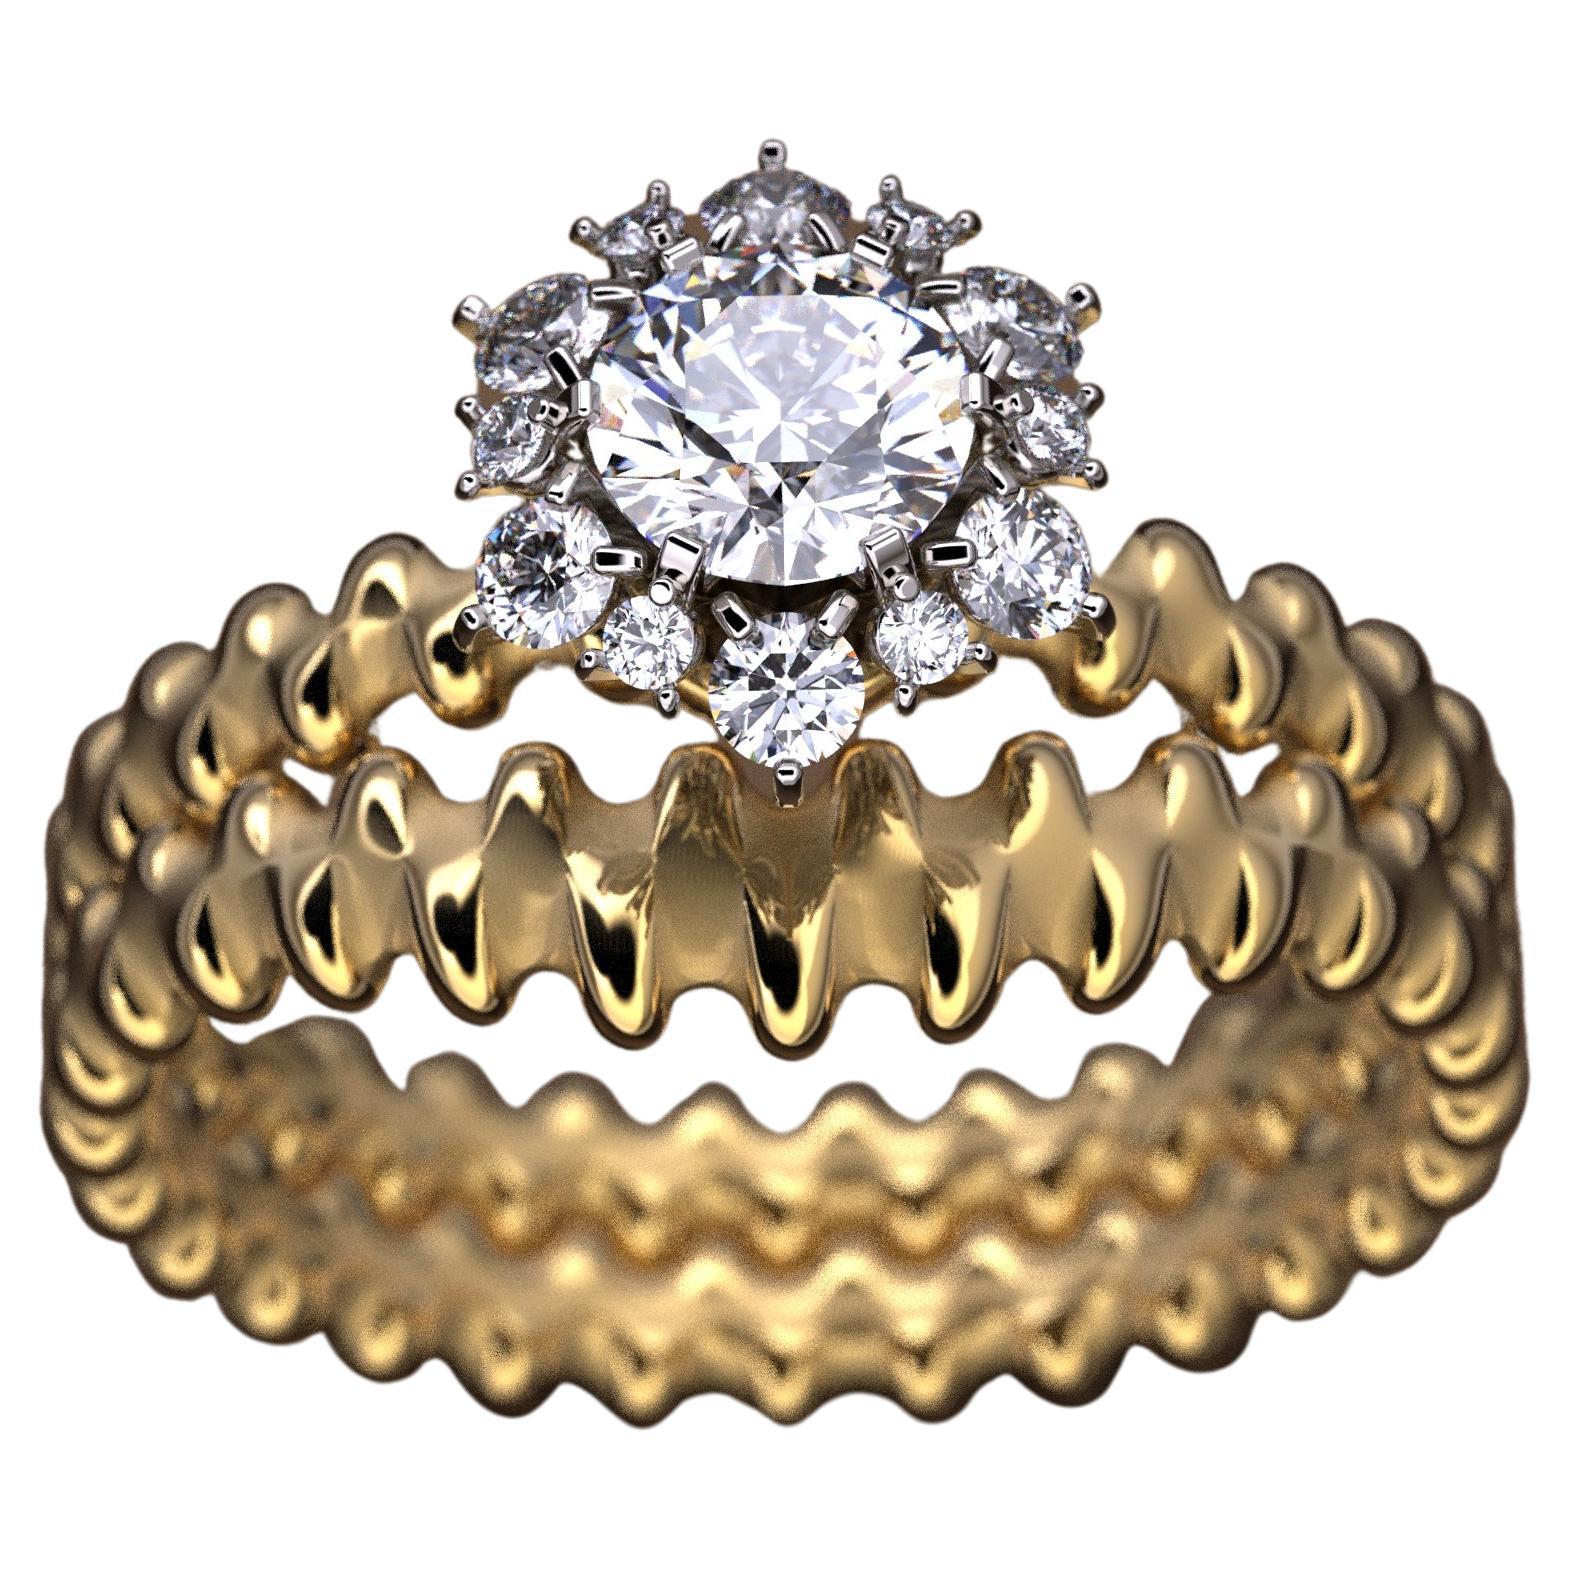 Diamond Engagement Ring Set, 18k Gold Engagement Ring and Matching Wedding Band